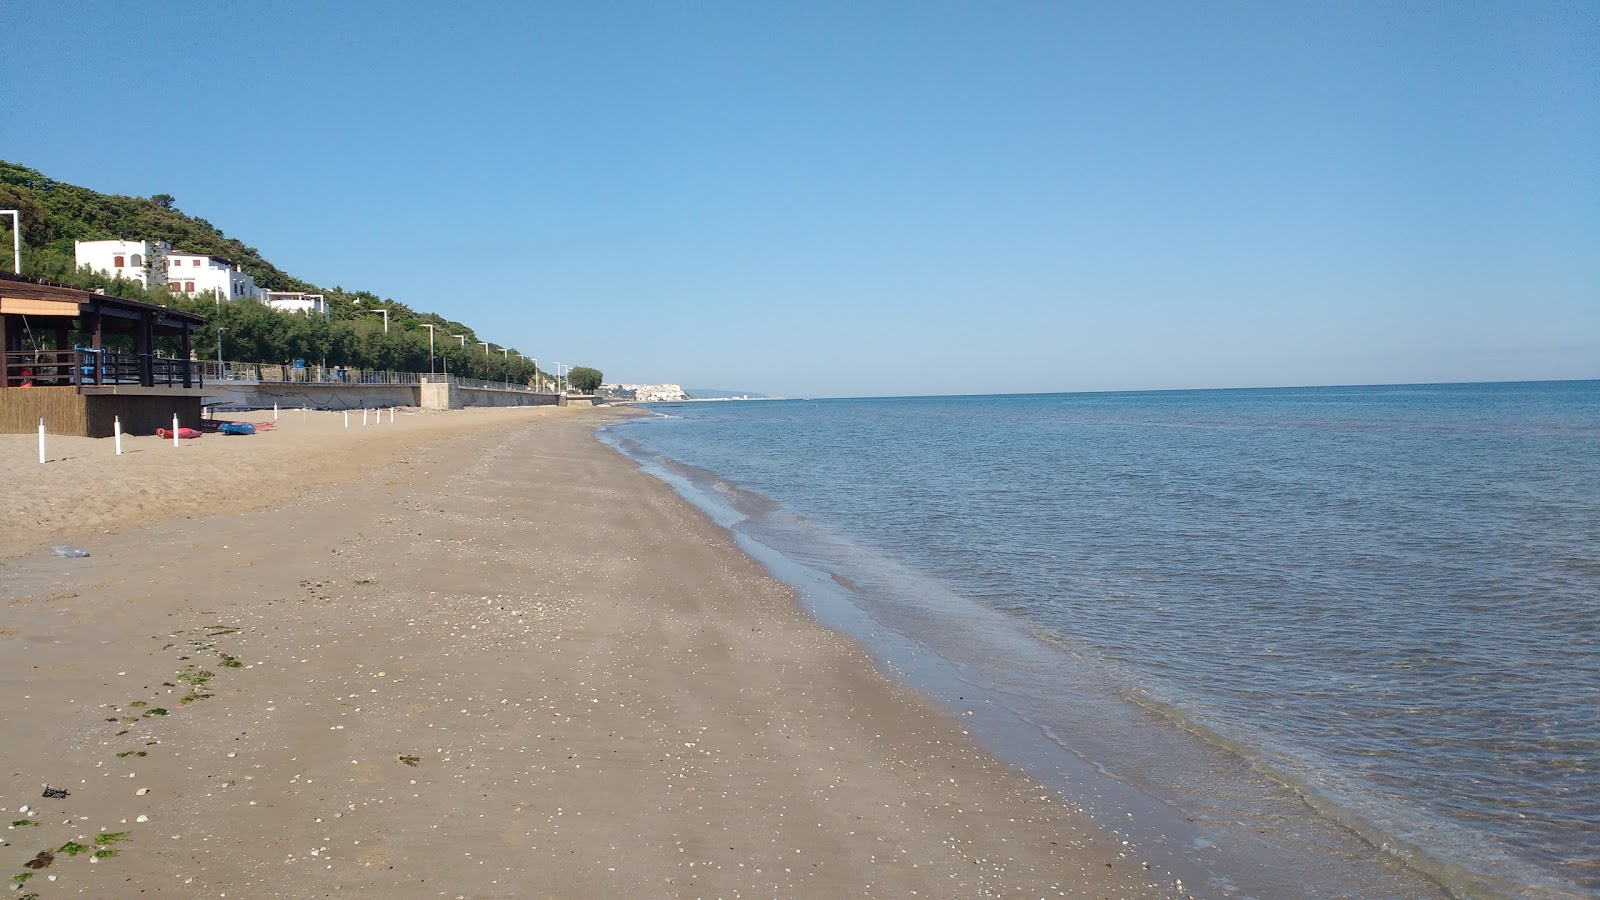 Foto van Spiaggia di San Menaio met bruin zand oppervlakte